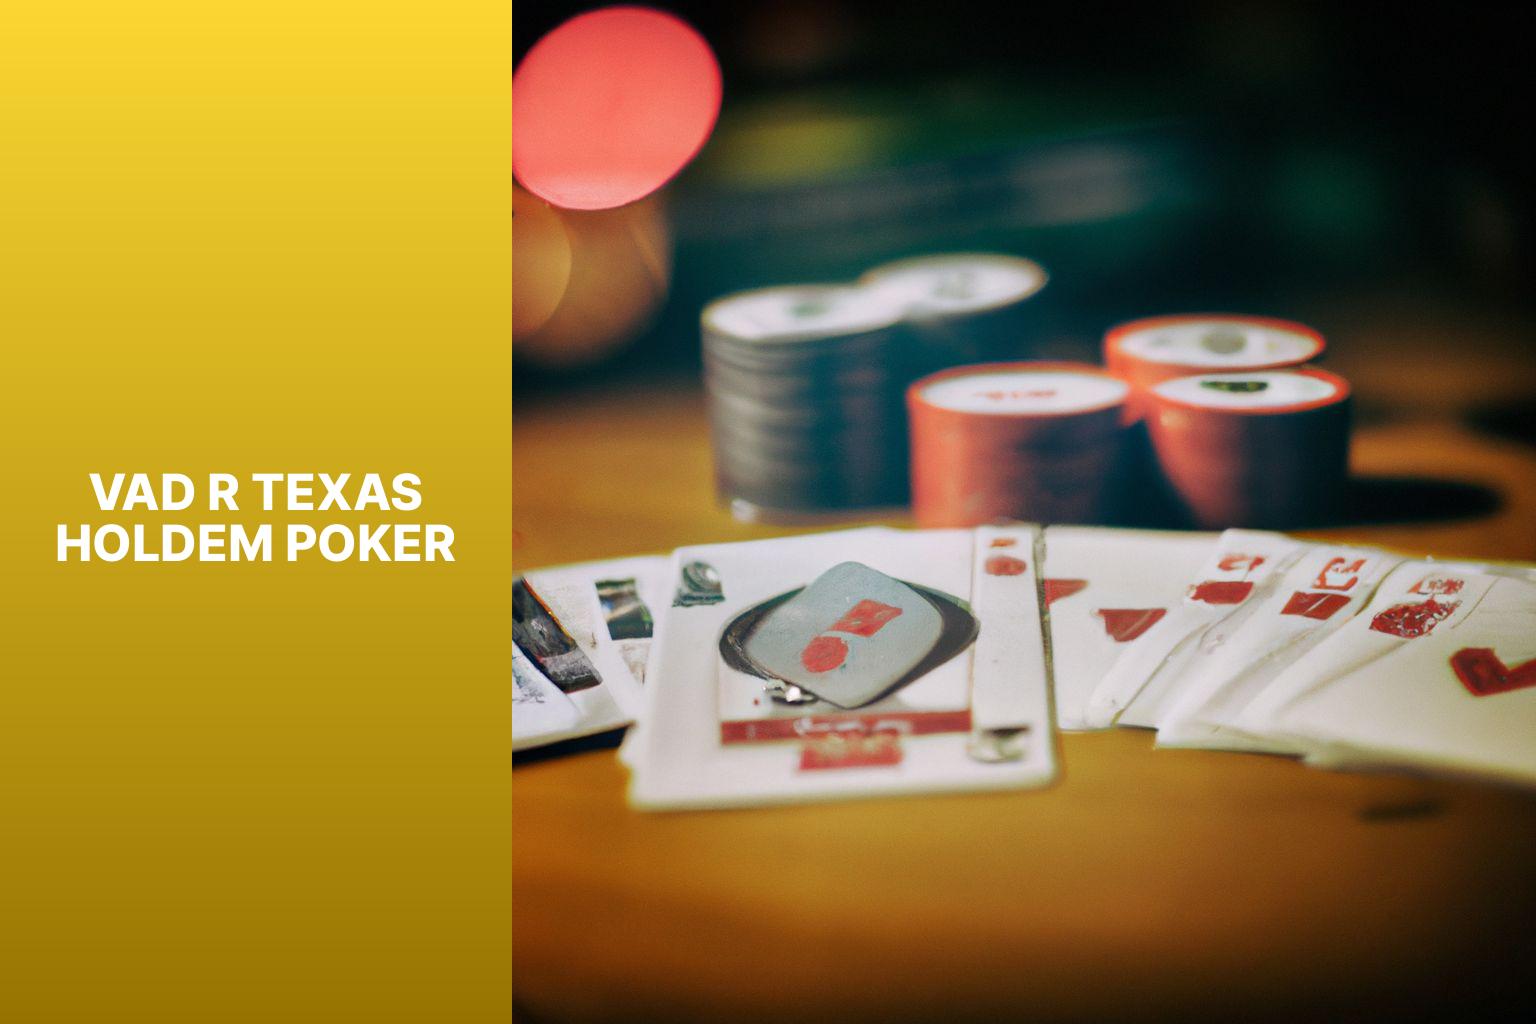 Vad r Texas holdem poker